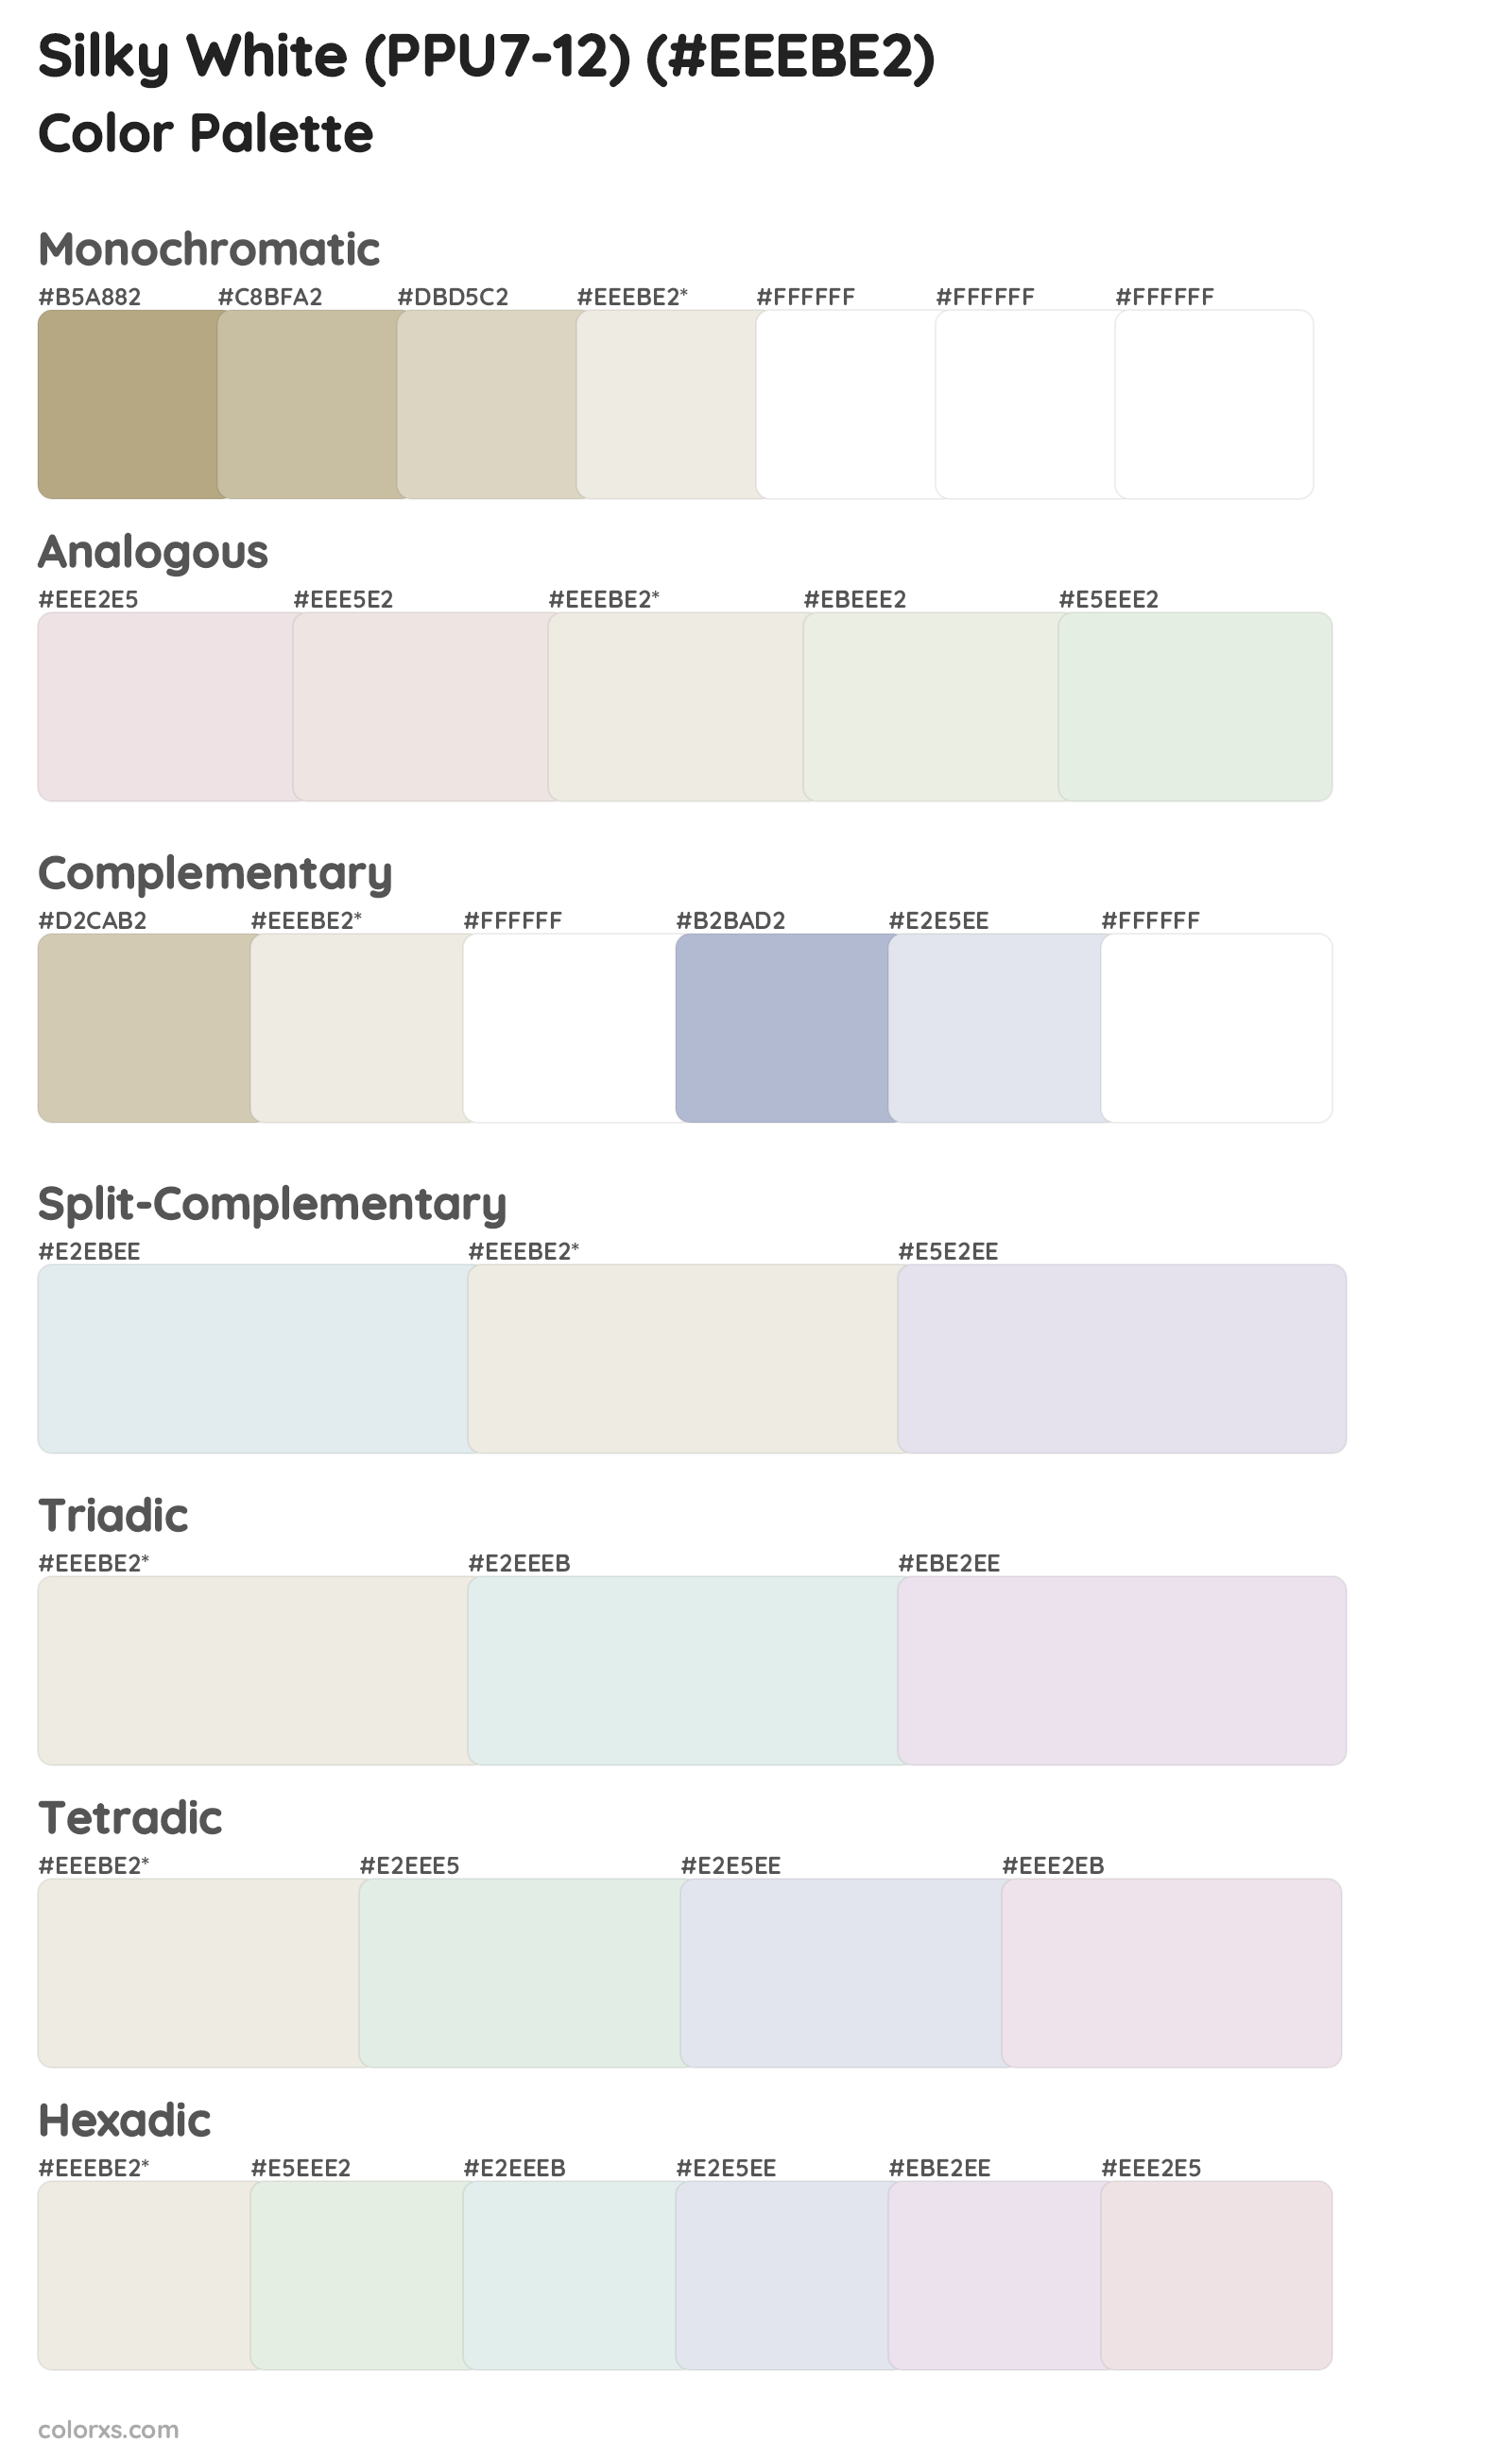 Silky White (PPU7-12) Color Scheme Palettes